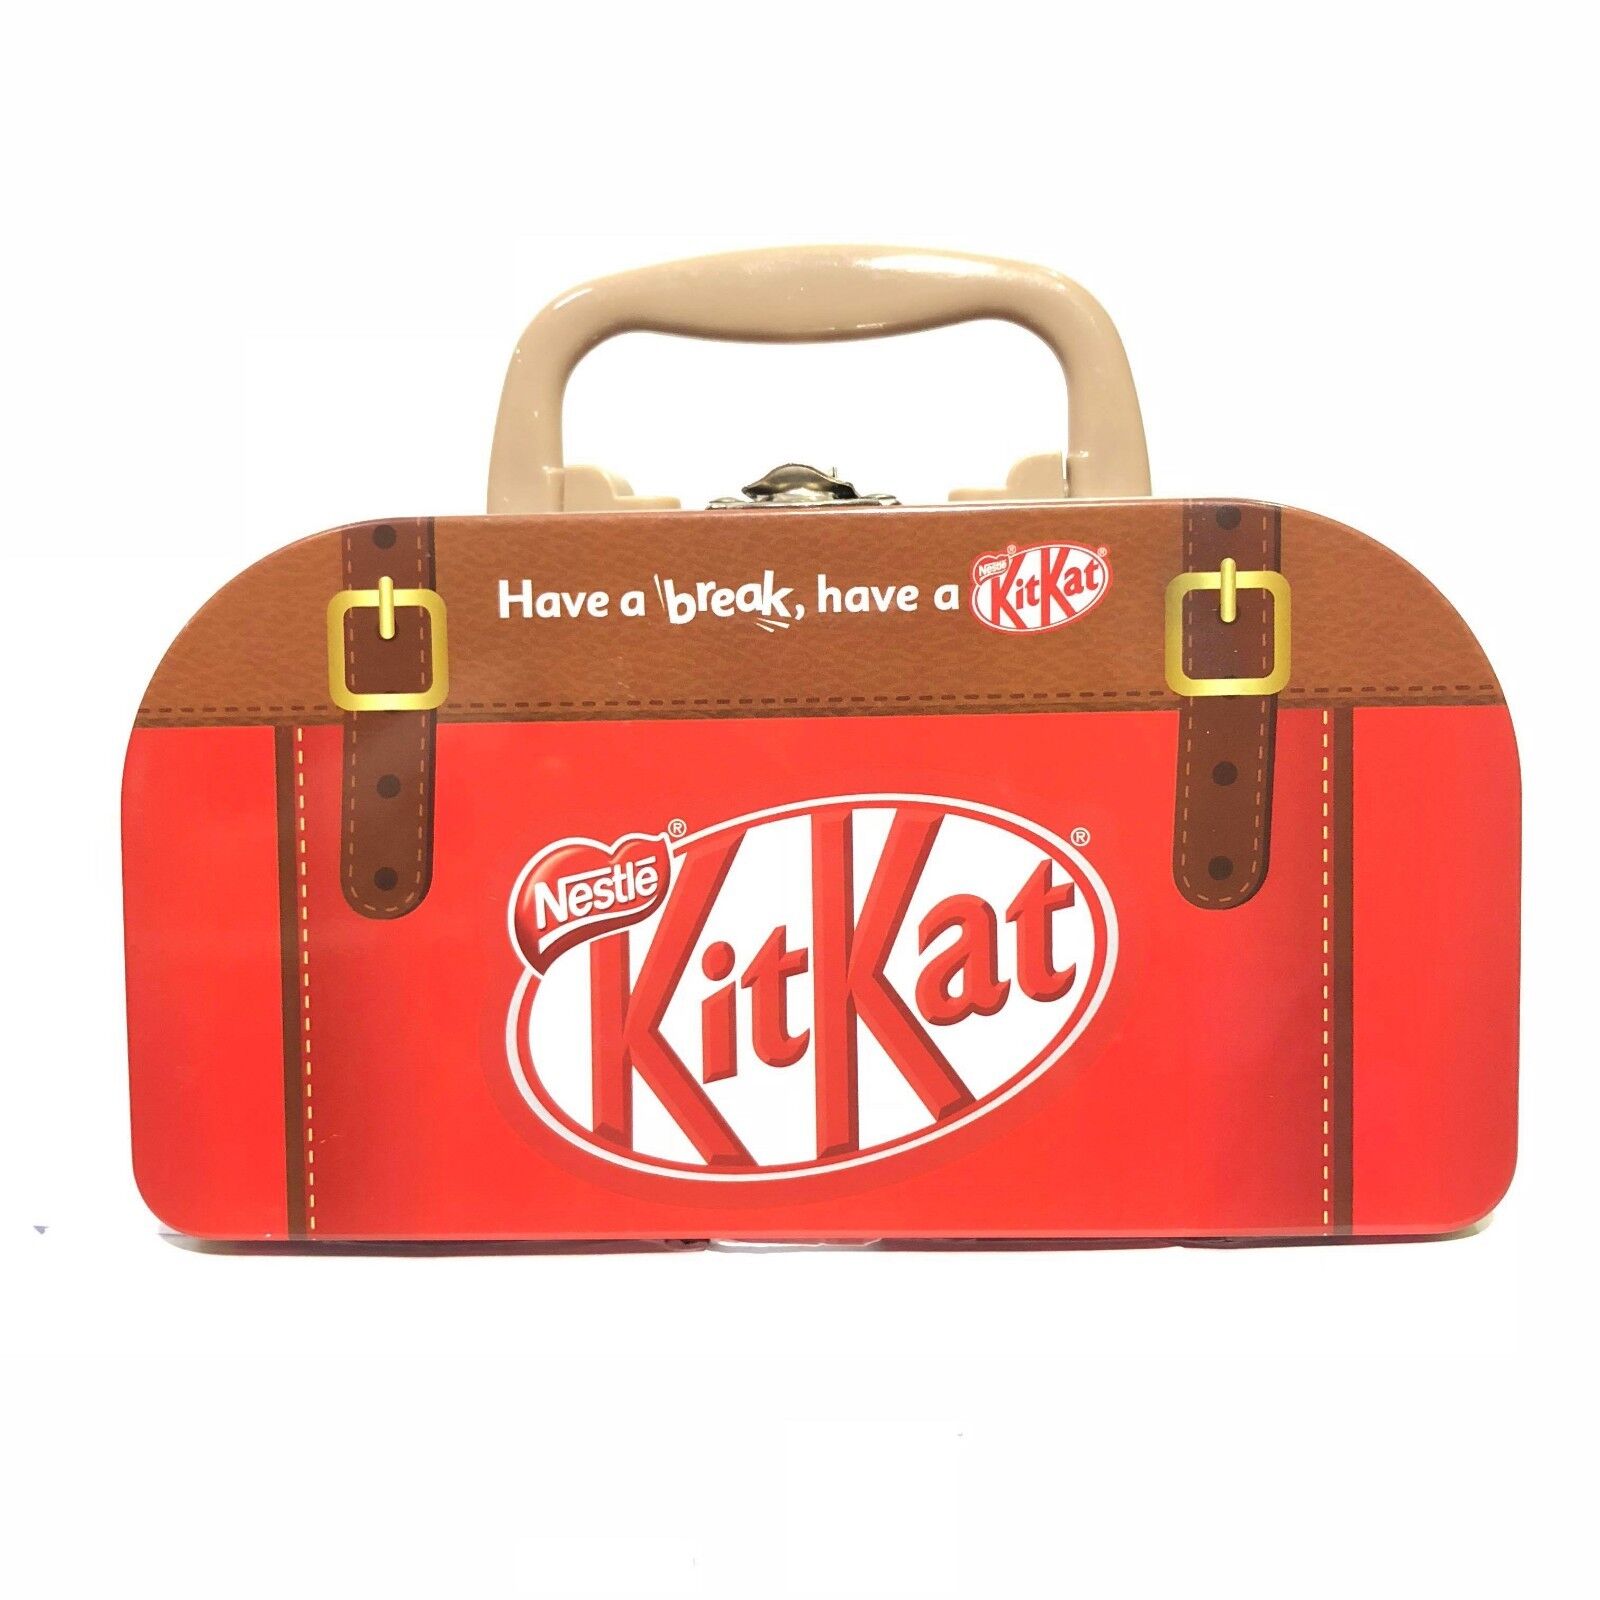 Nestle KITKAT empty Travel Bag Tin Box Limited Edition